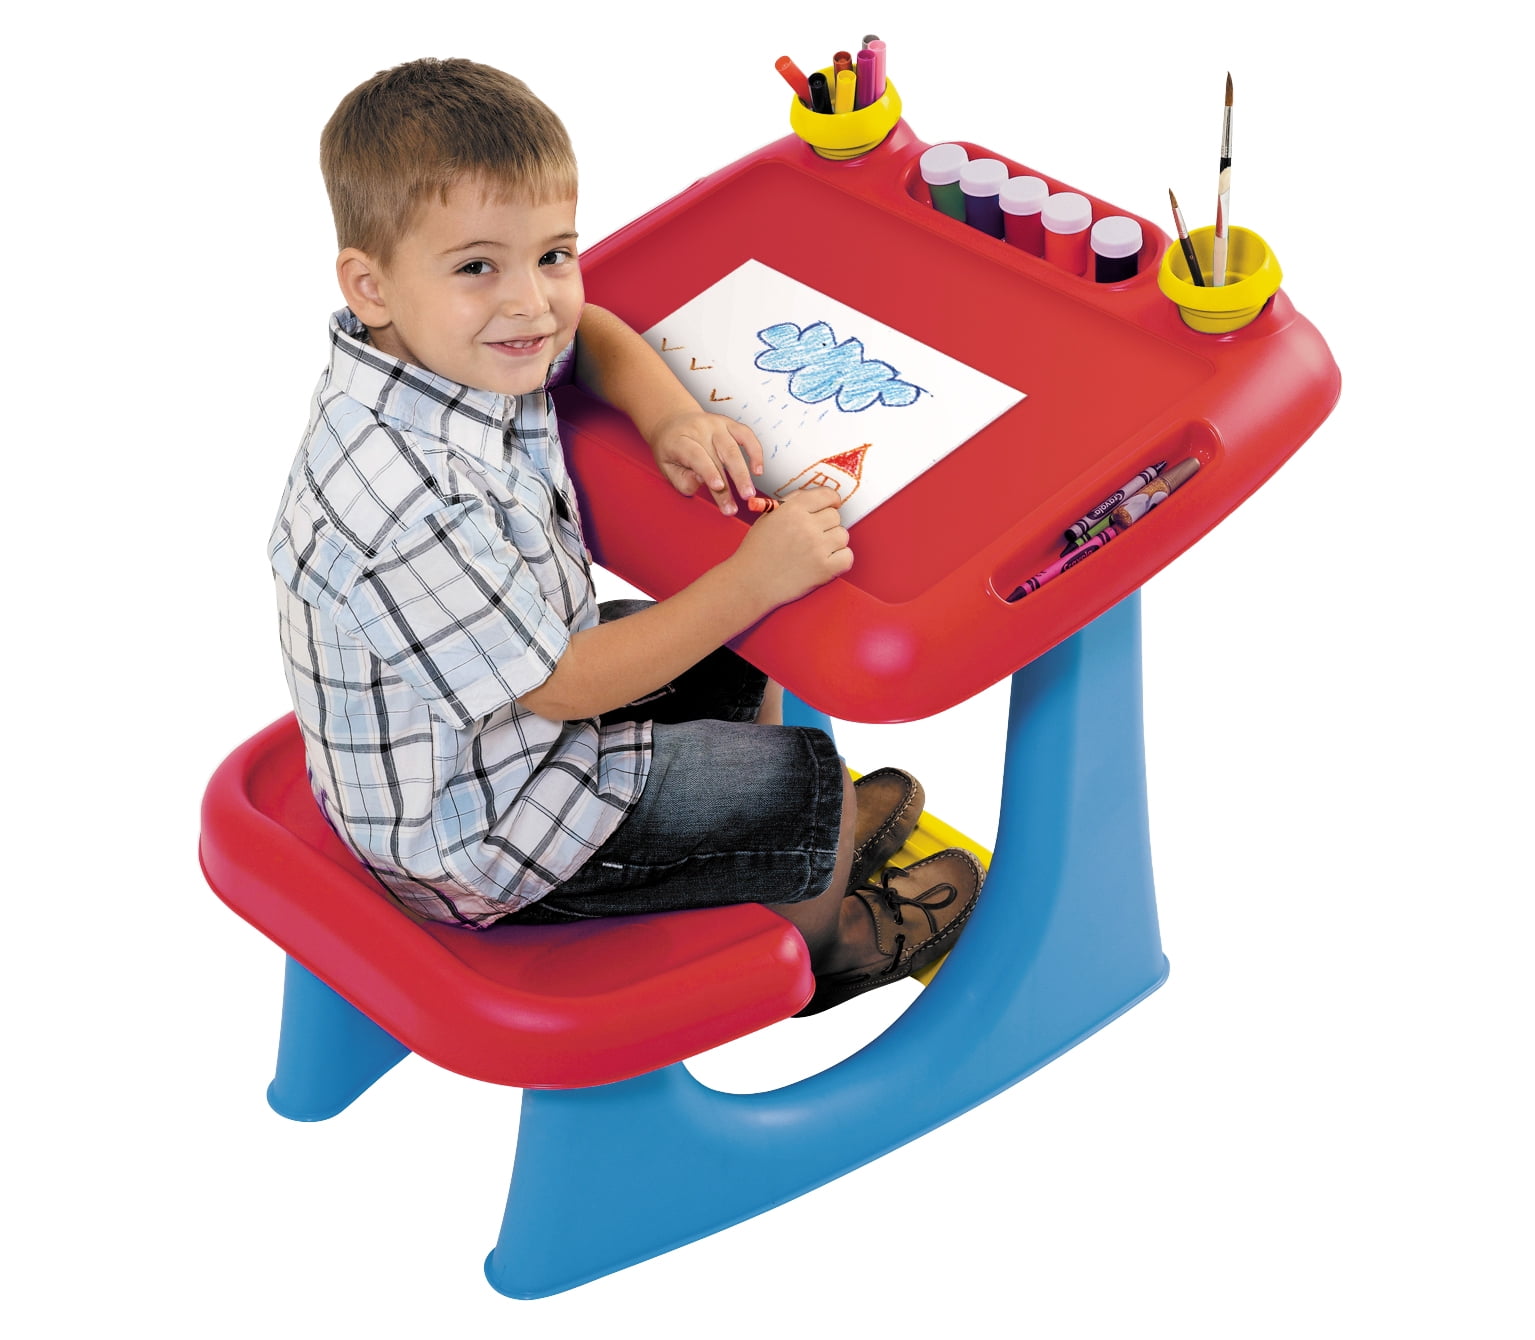 kids play desk